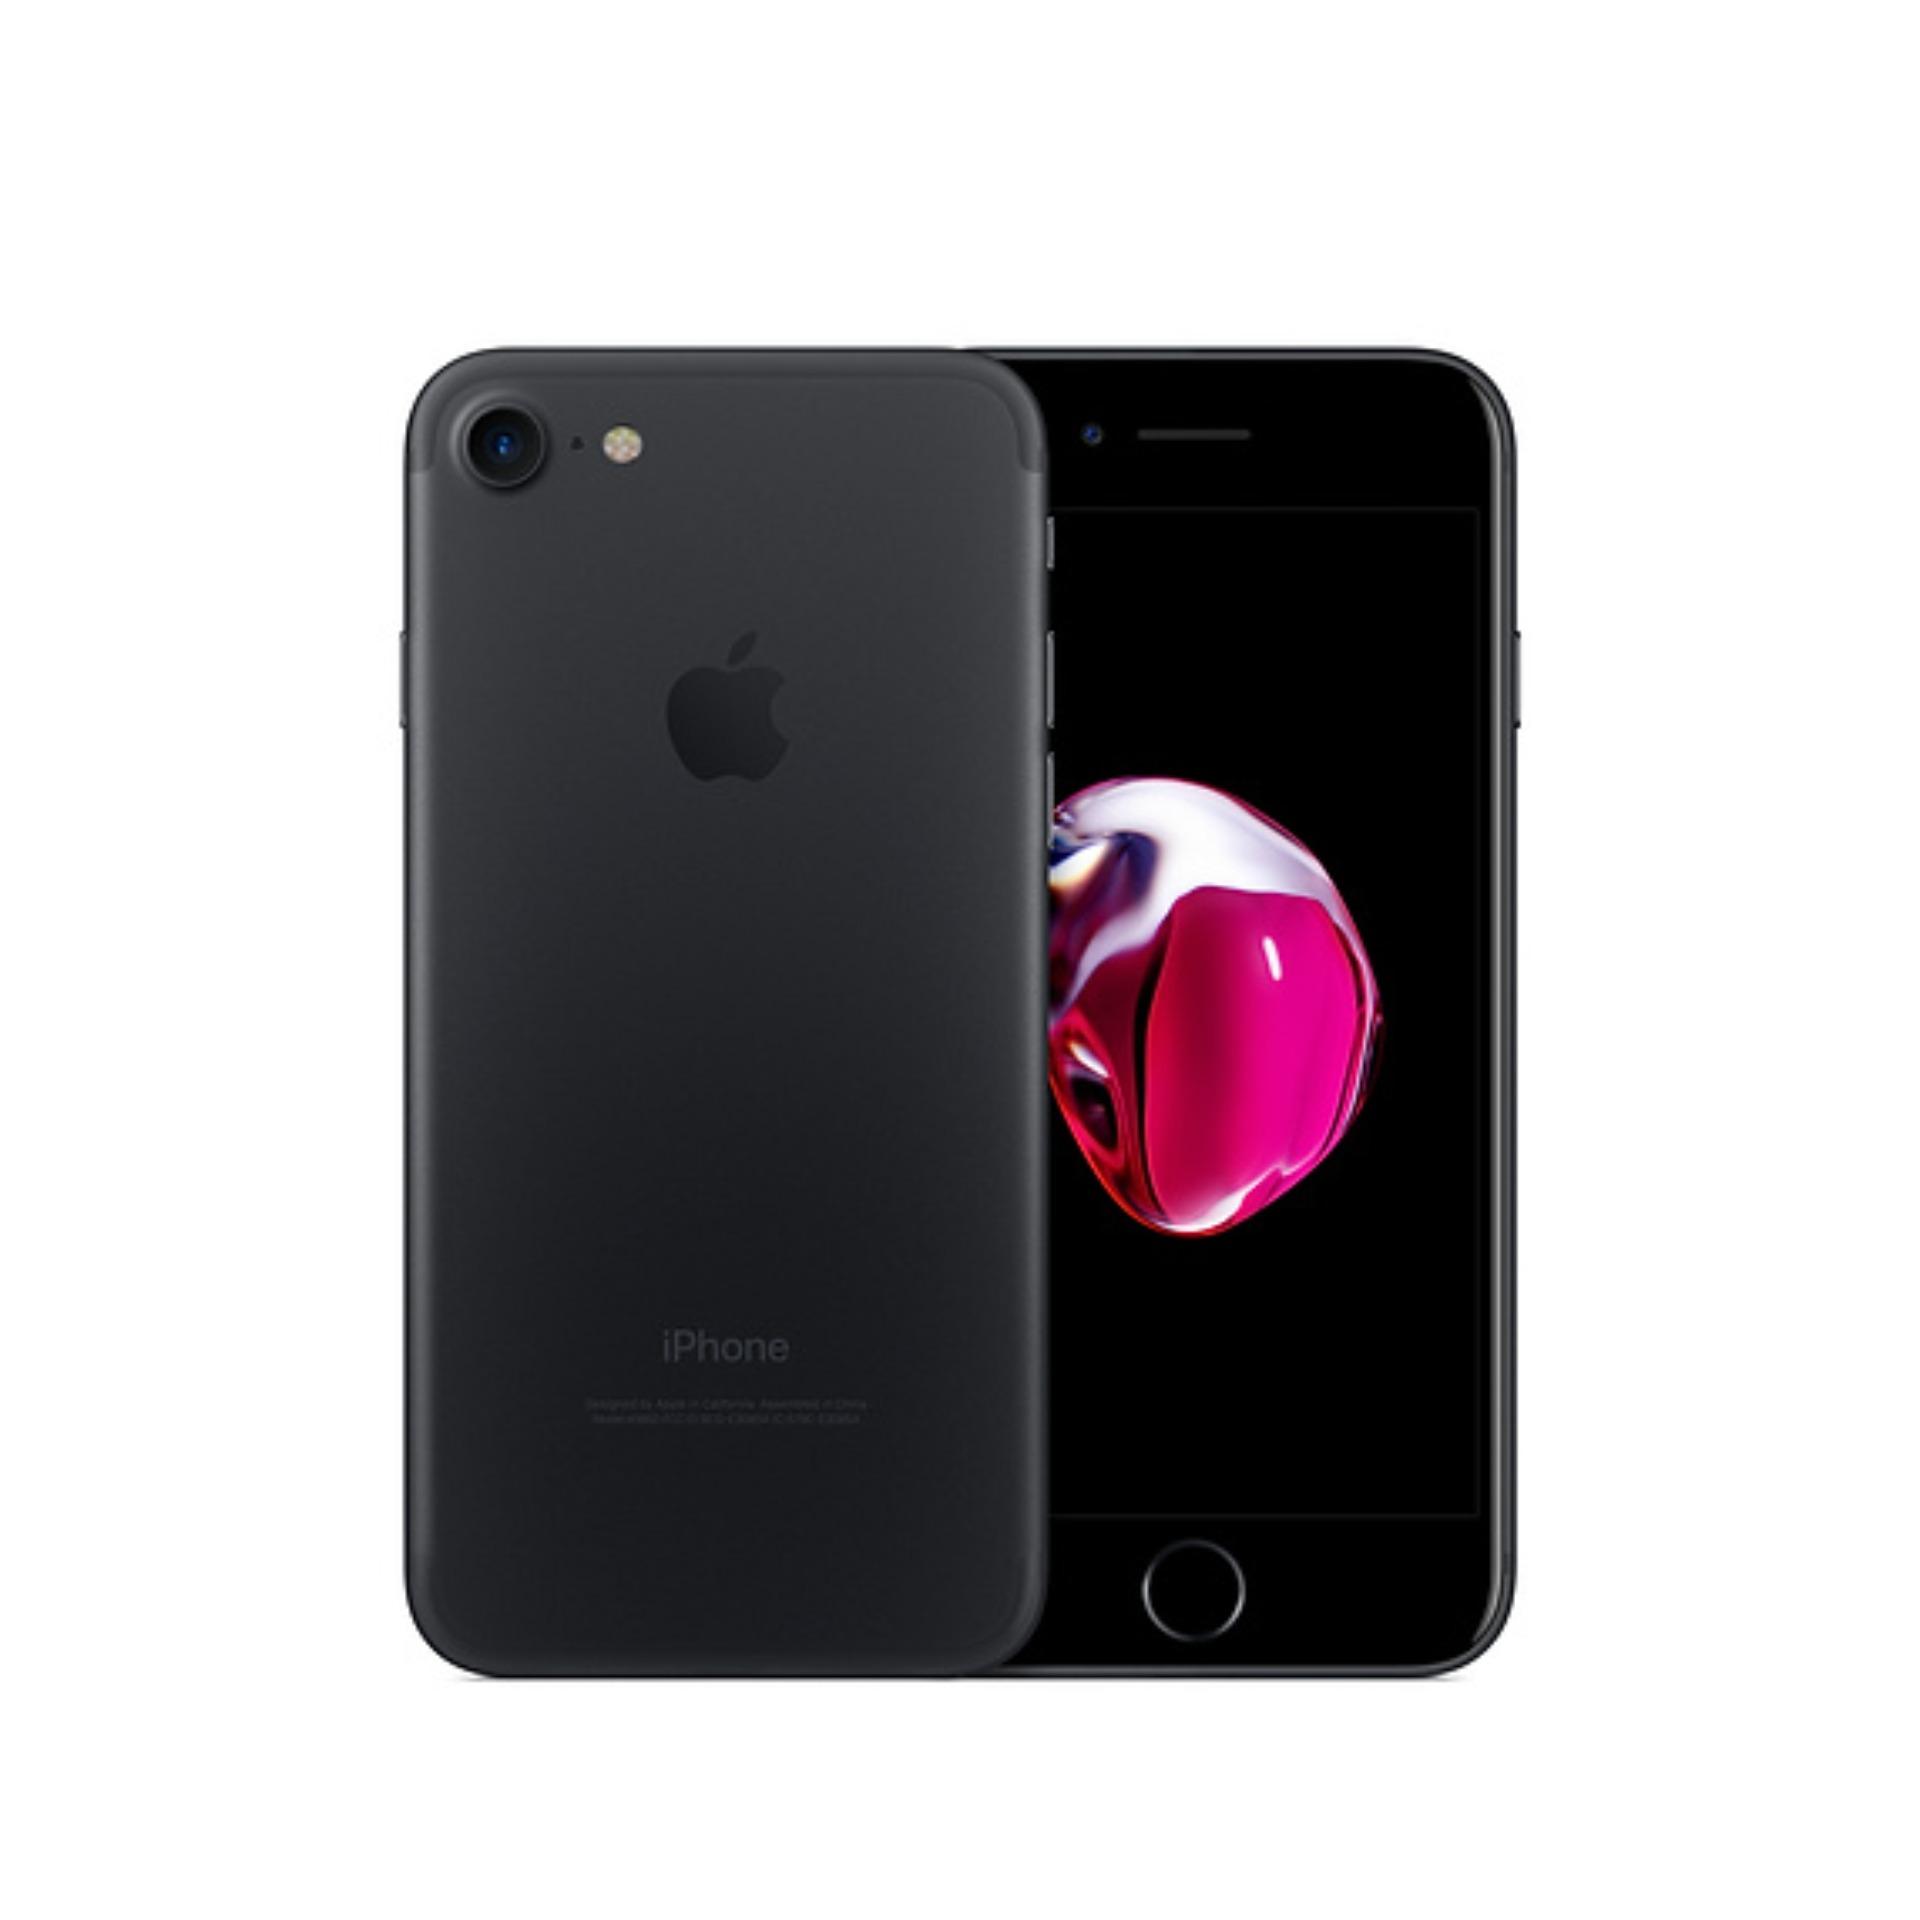 Apple iPhone 7 - 128GB - Black Matte - Free Tempered Glass